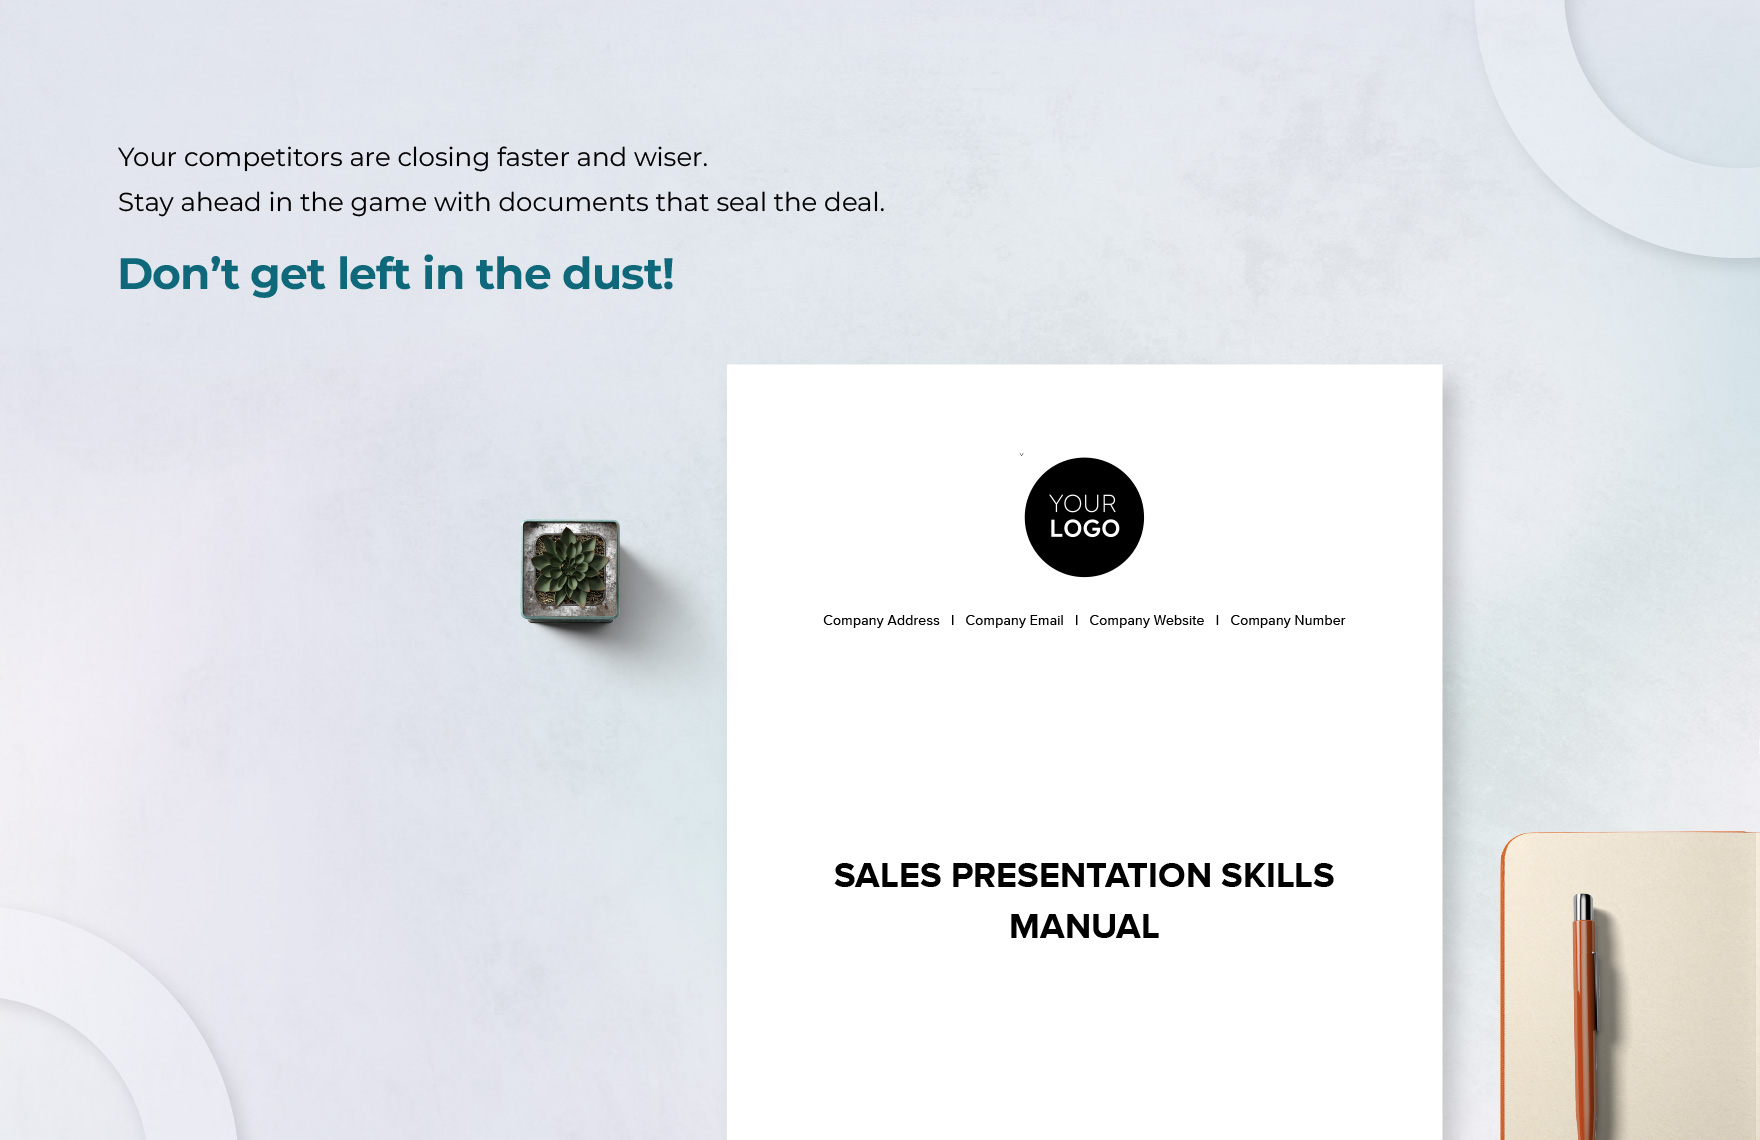 Sales Presentation Skills Manual Template